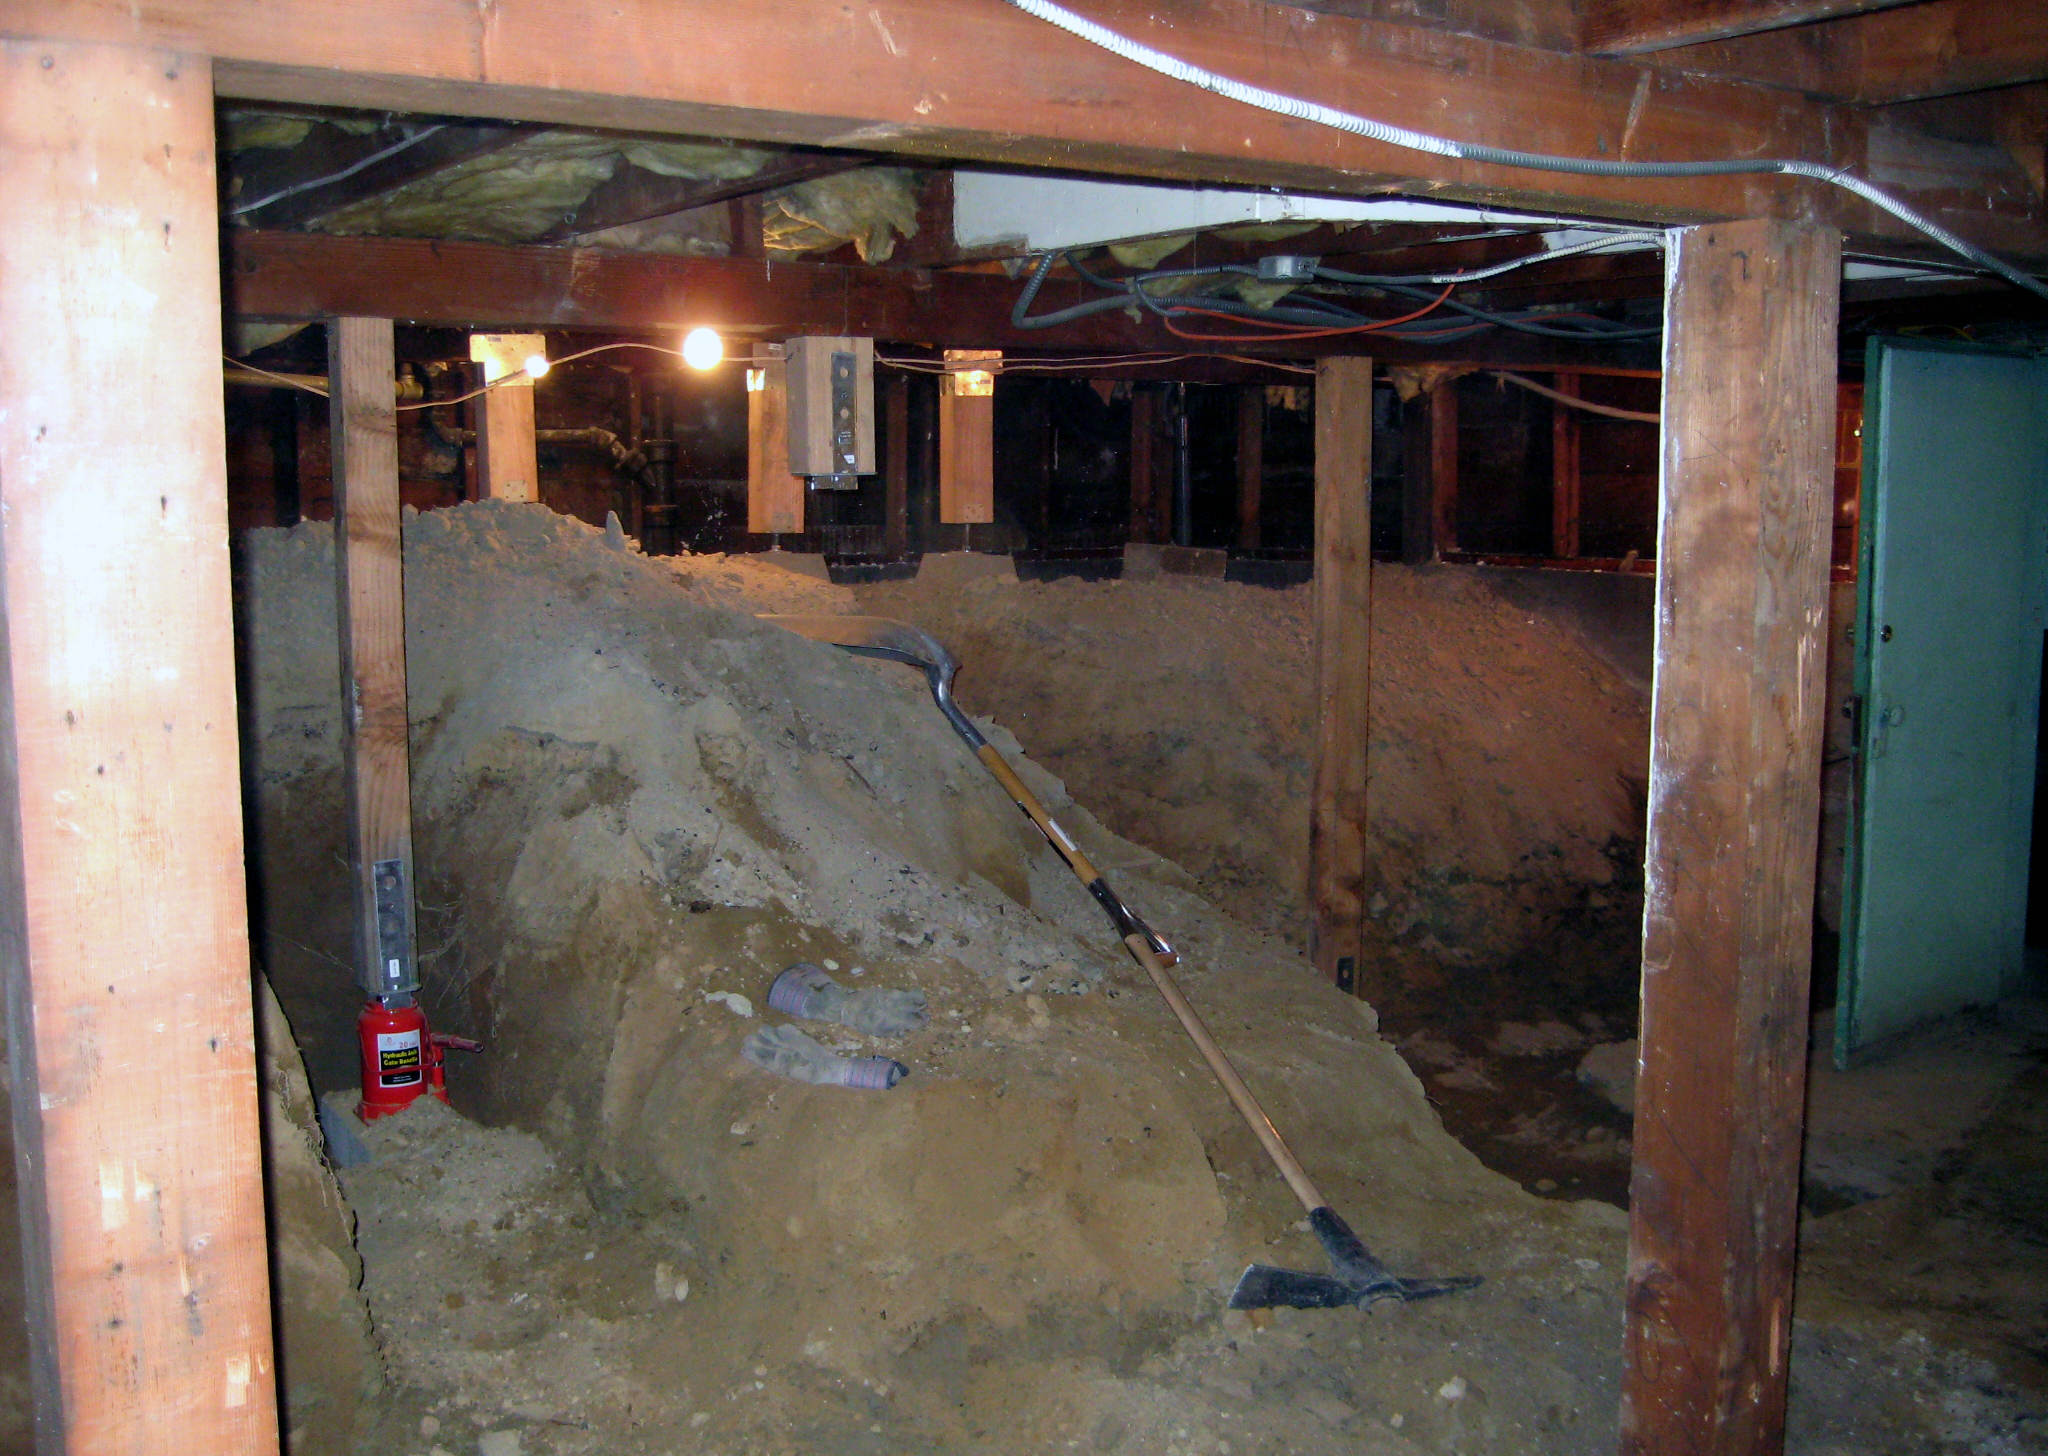 basement crawl space digging turn chezerbey crawlspace living storage diy conversion foundation building addition short slightly converted distorted dark